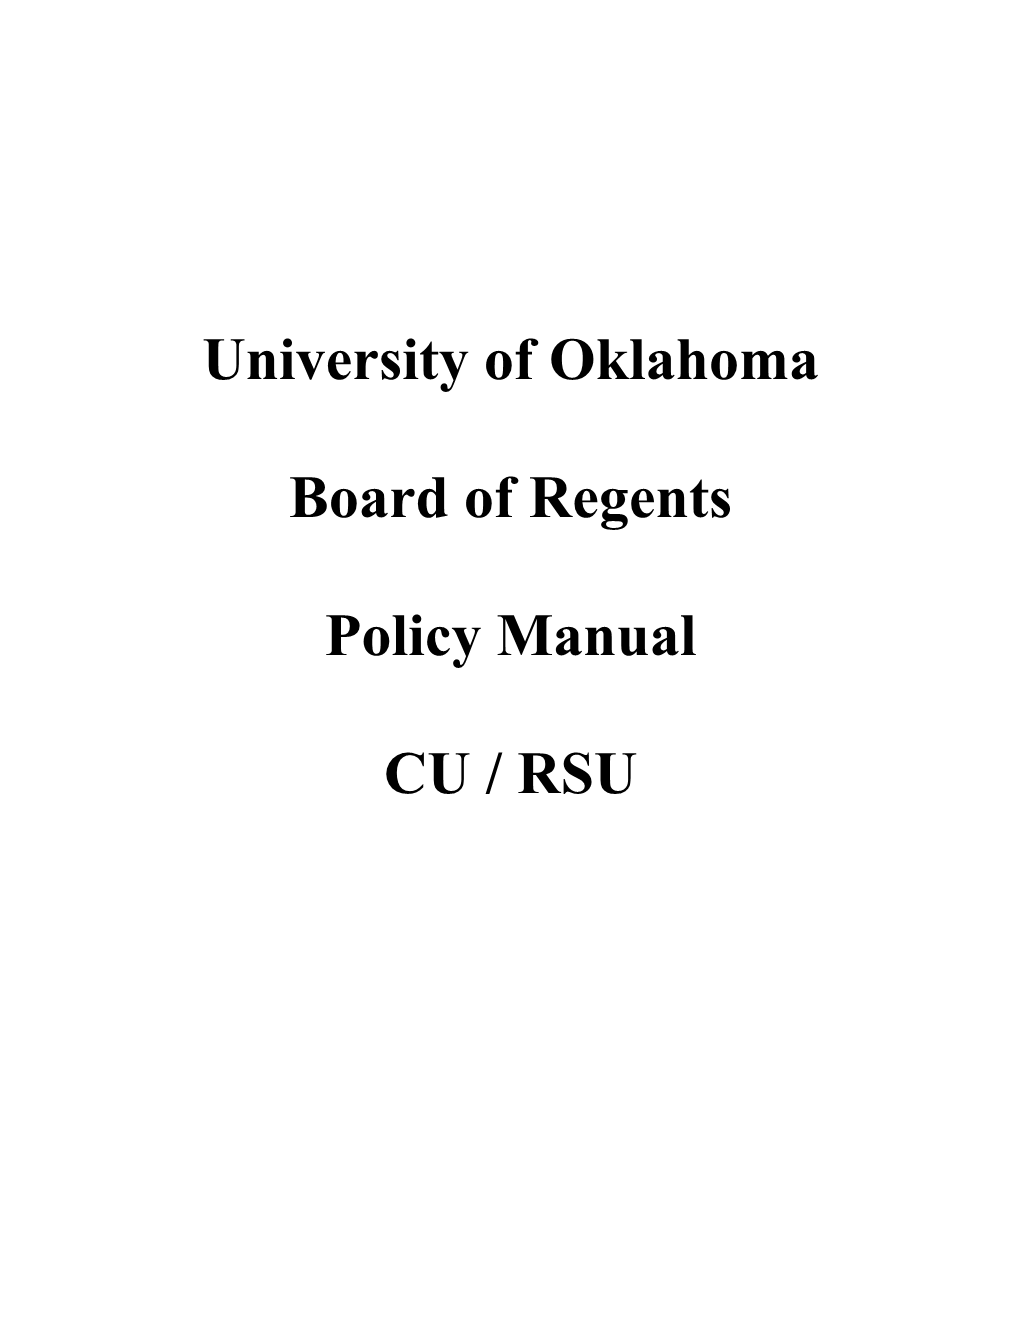 University of Oklahoma Board of Regents Policy Manual CU